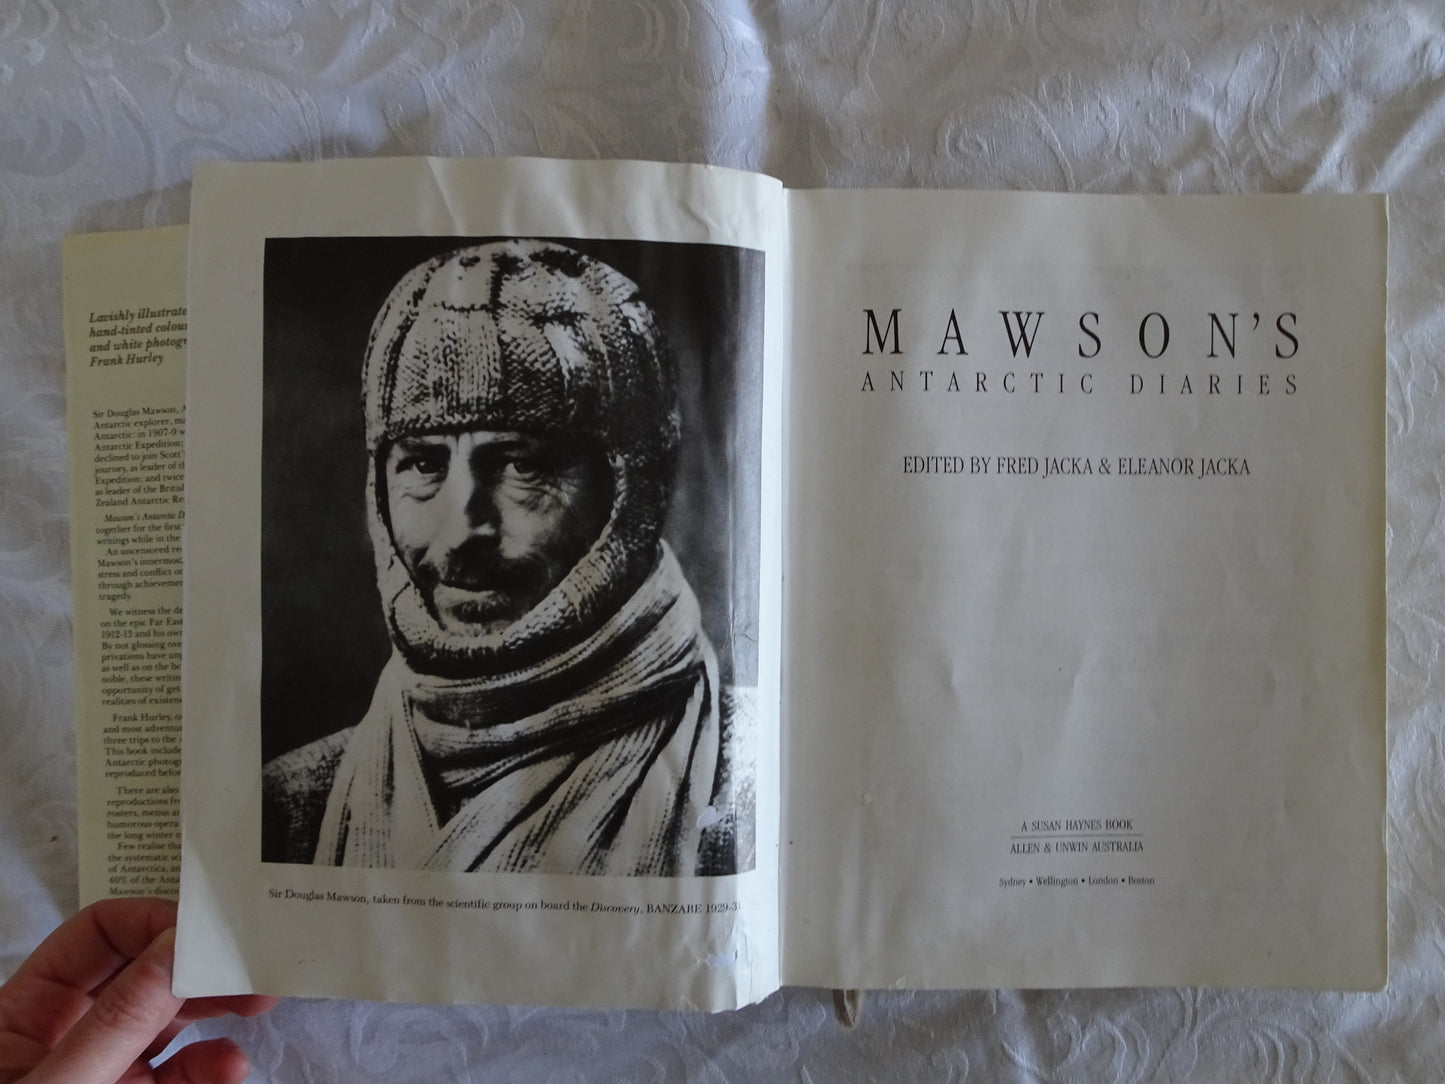 Mawson's Antarctic Diaries by Fred Jacka & Eleanor Jacka